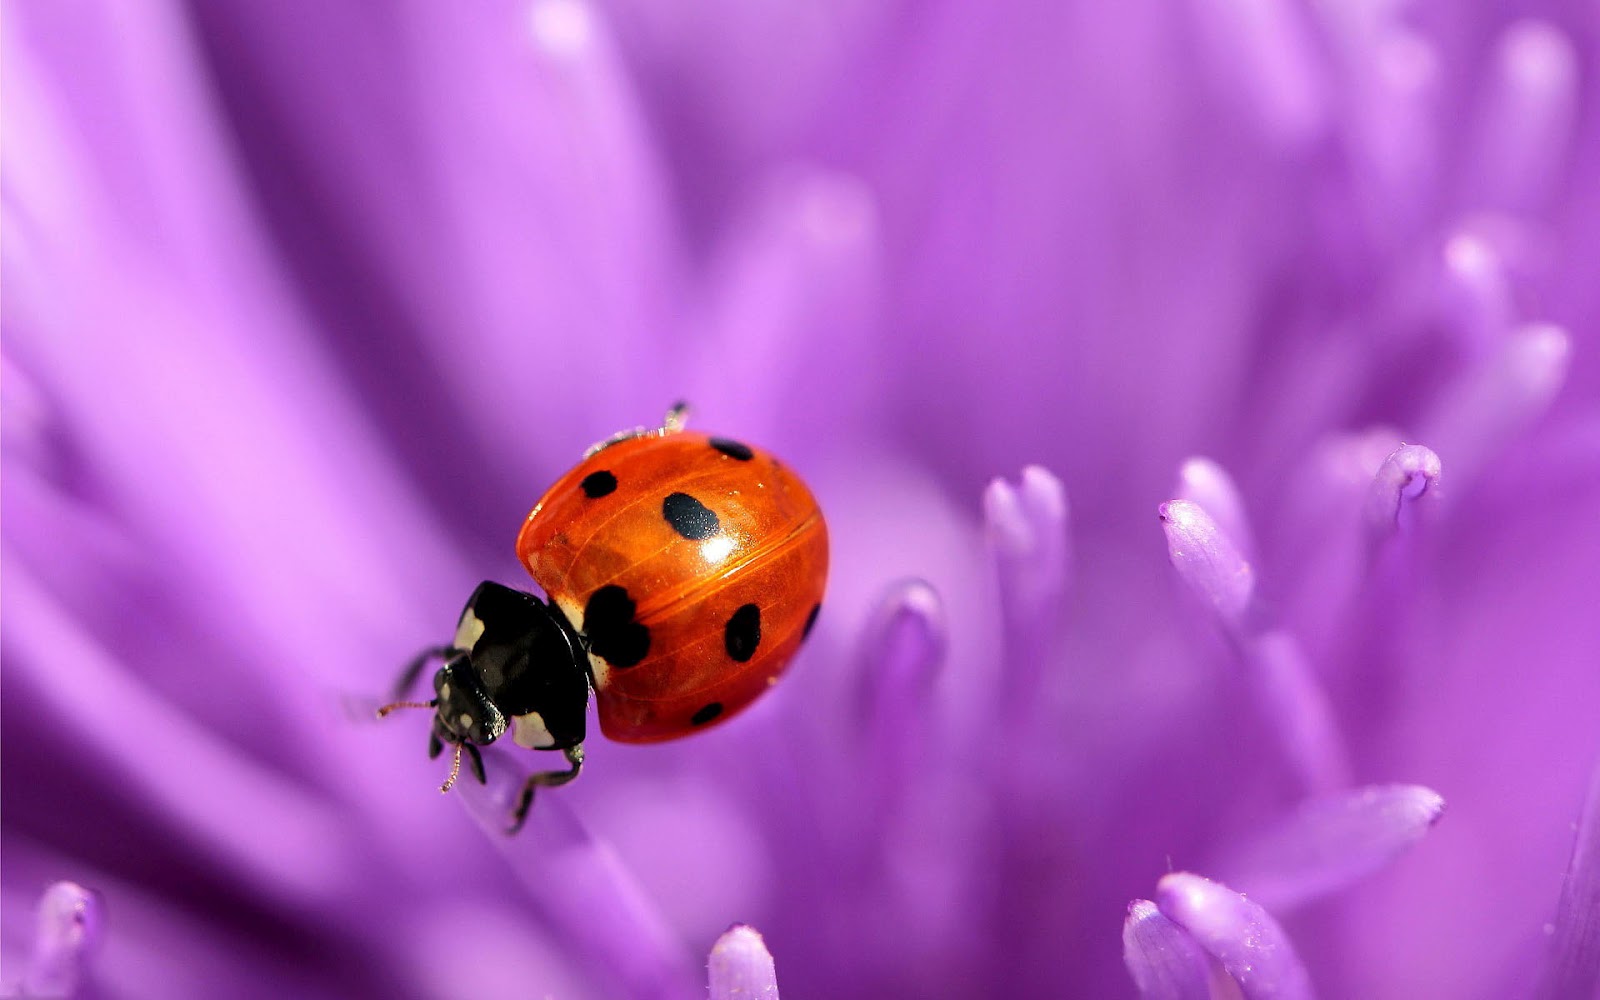 hd ladybug wallpaper with a ladybug on a purple flower hd ladybugs